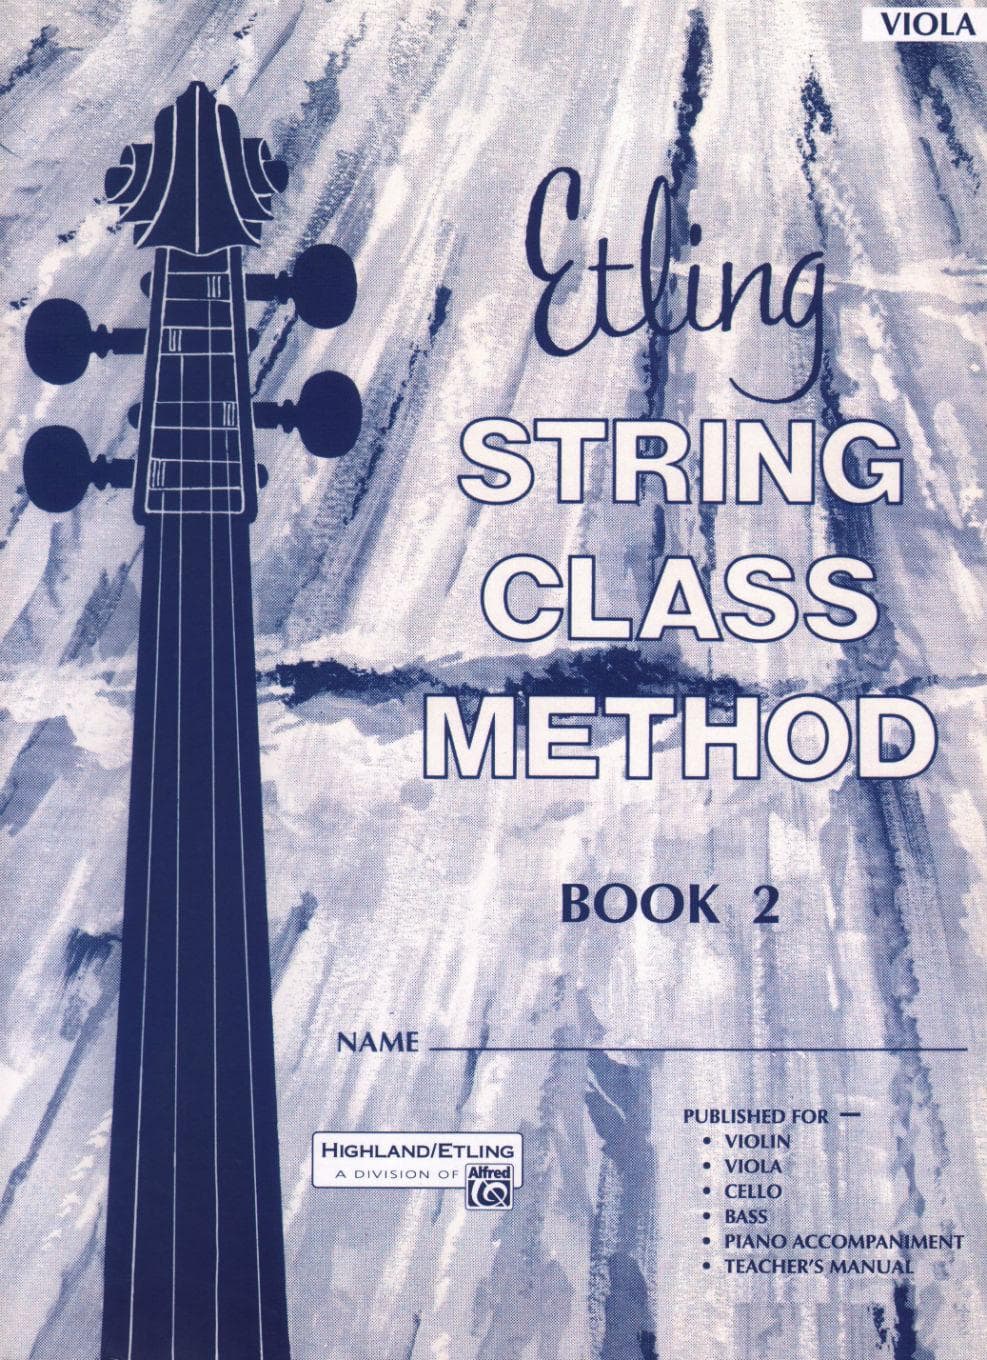 Etling, Forest - Etling String Class Method, Book 2 - Viola - Alfred Music Publishing